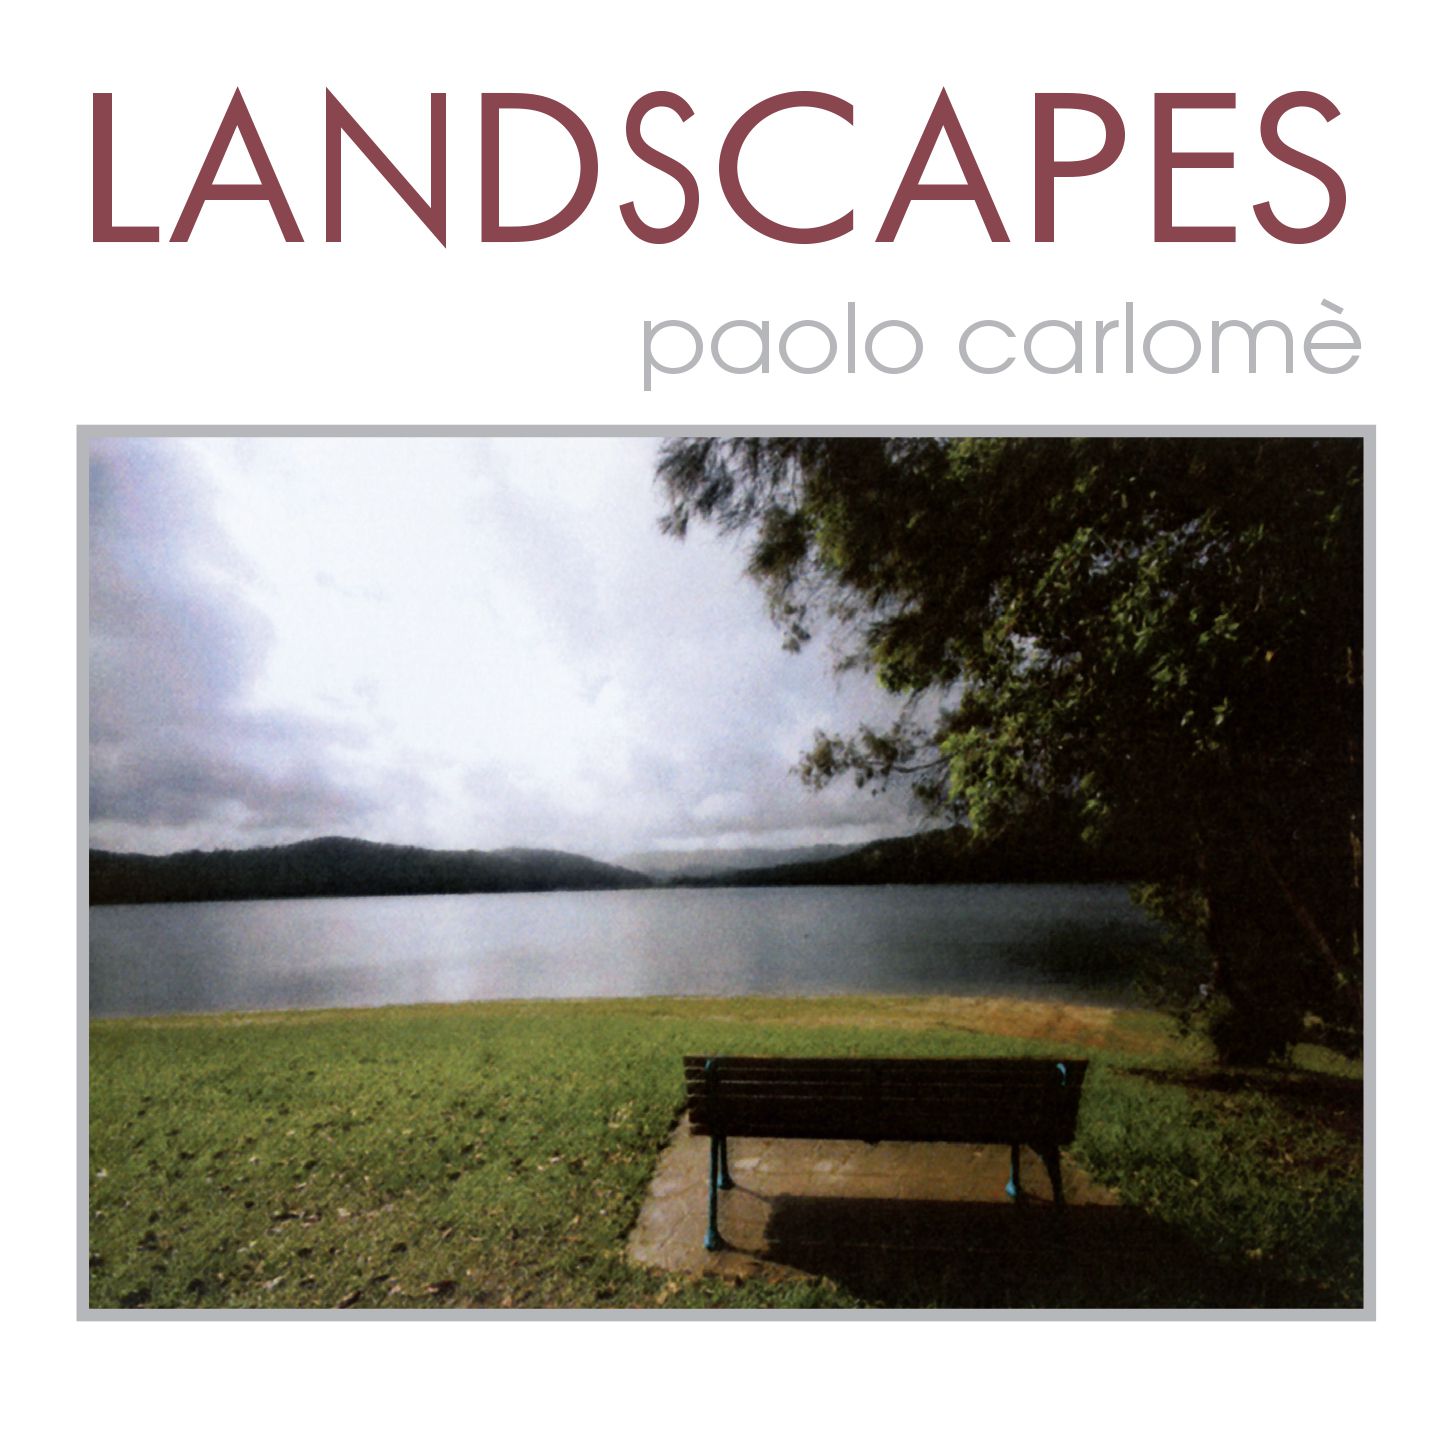 Landscapes - Paolo Carlomè definitiva